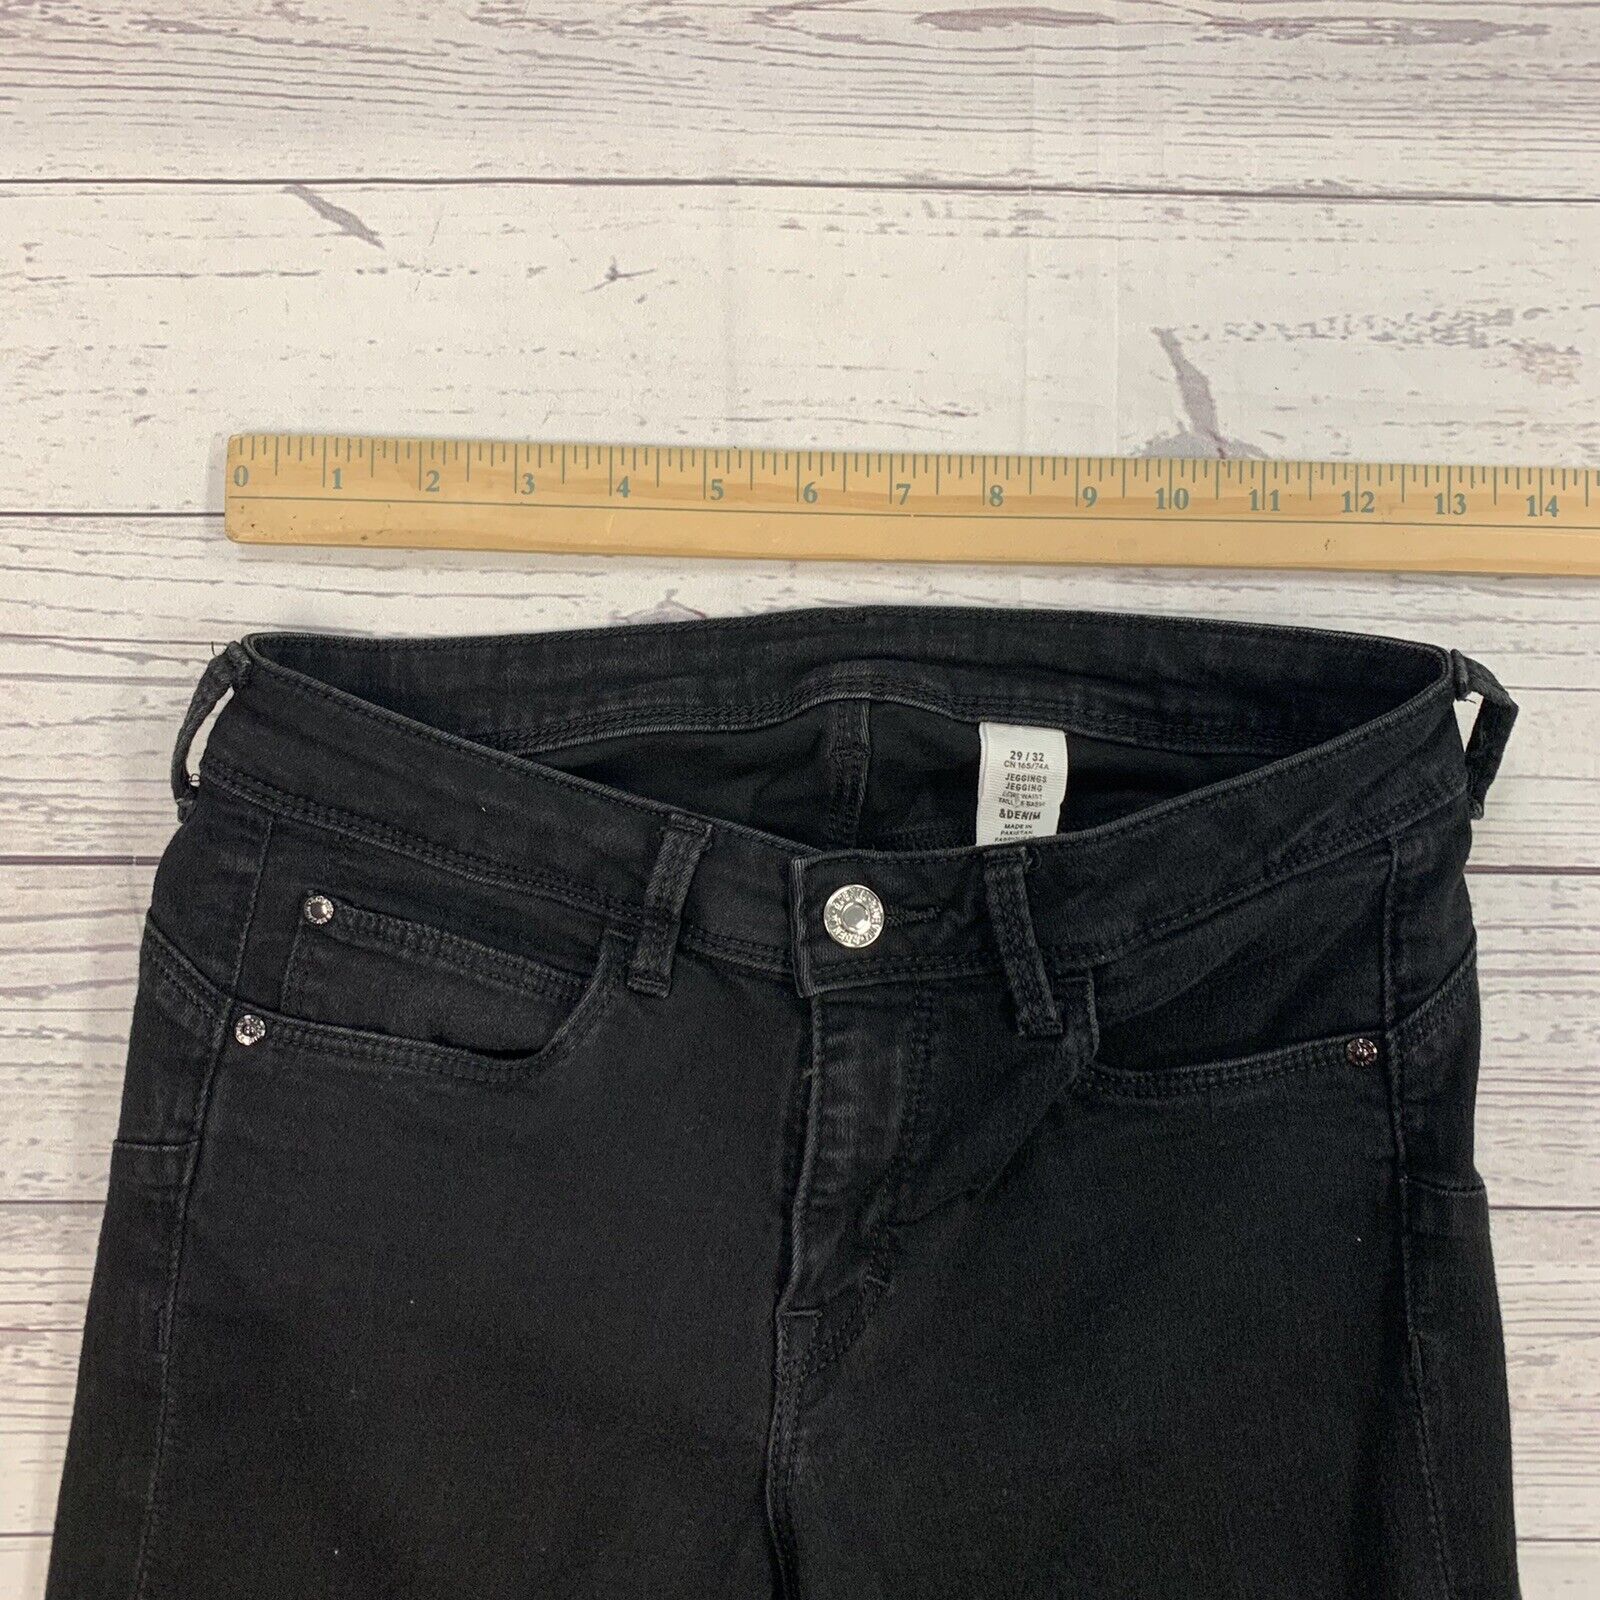 Denim Black Jeggings Jeans Size 29 - beyond exchange